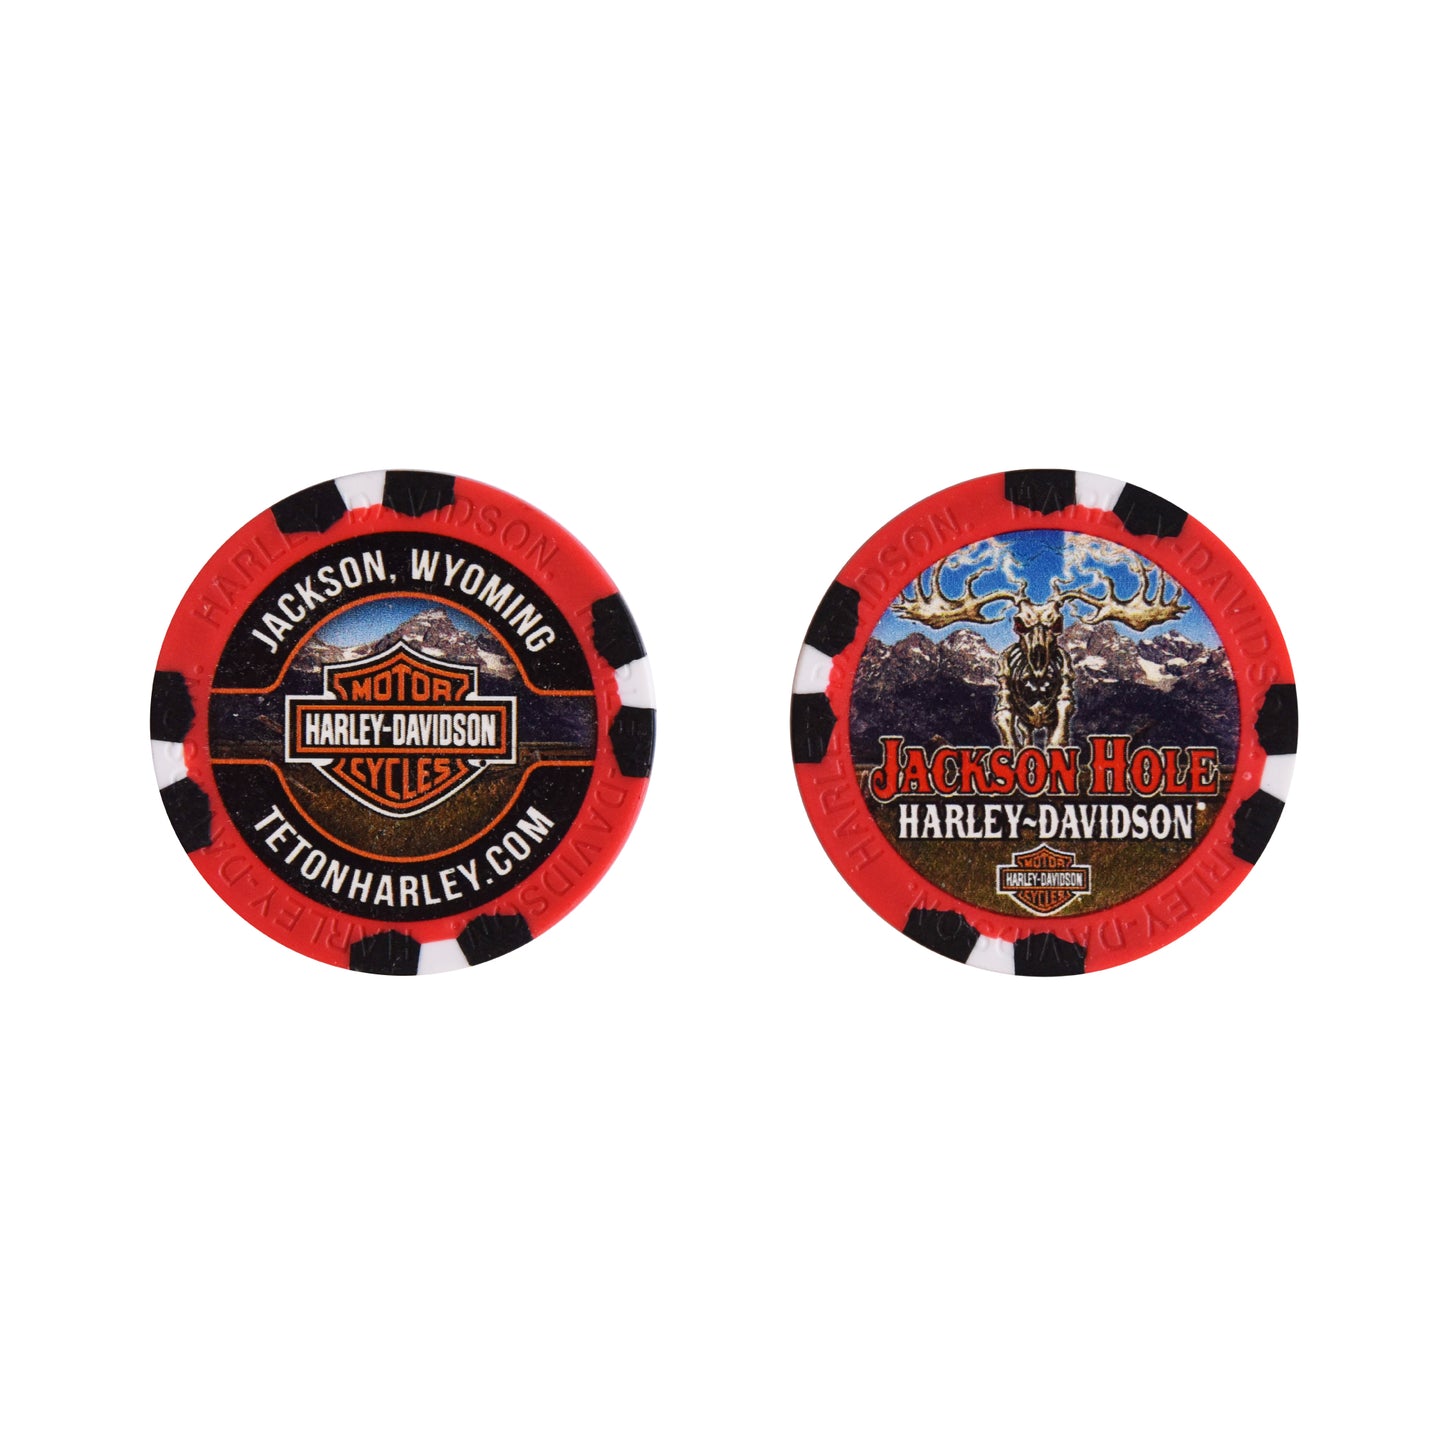 Jackson Hole Harley-Davidson Poker Chips